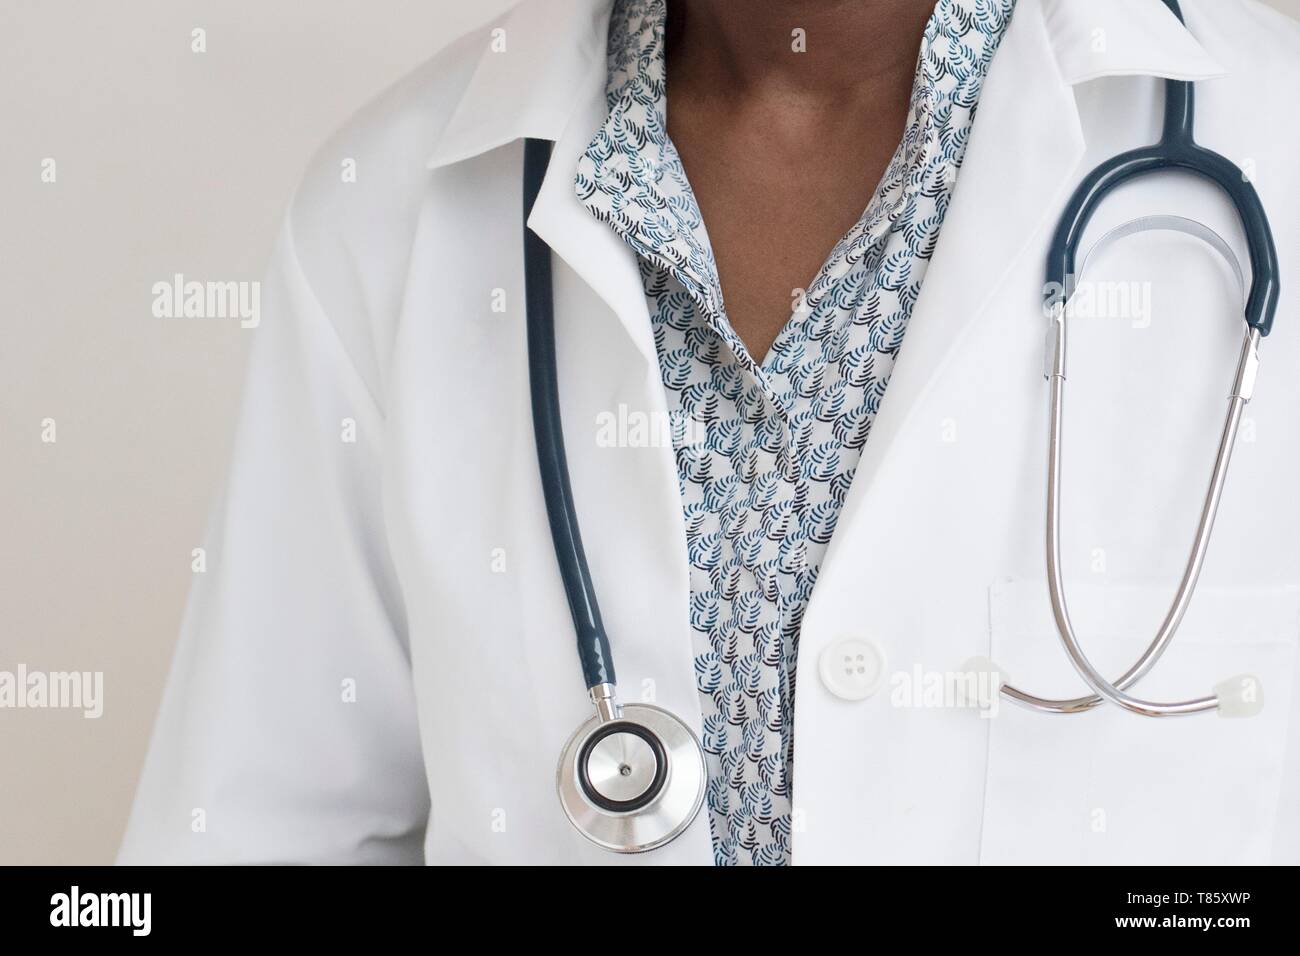 Female doctor wearing stethoscope Stock Photo